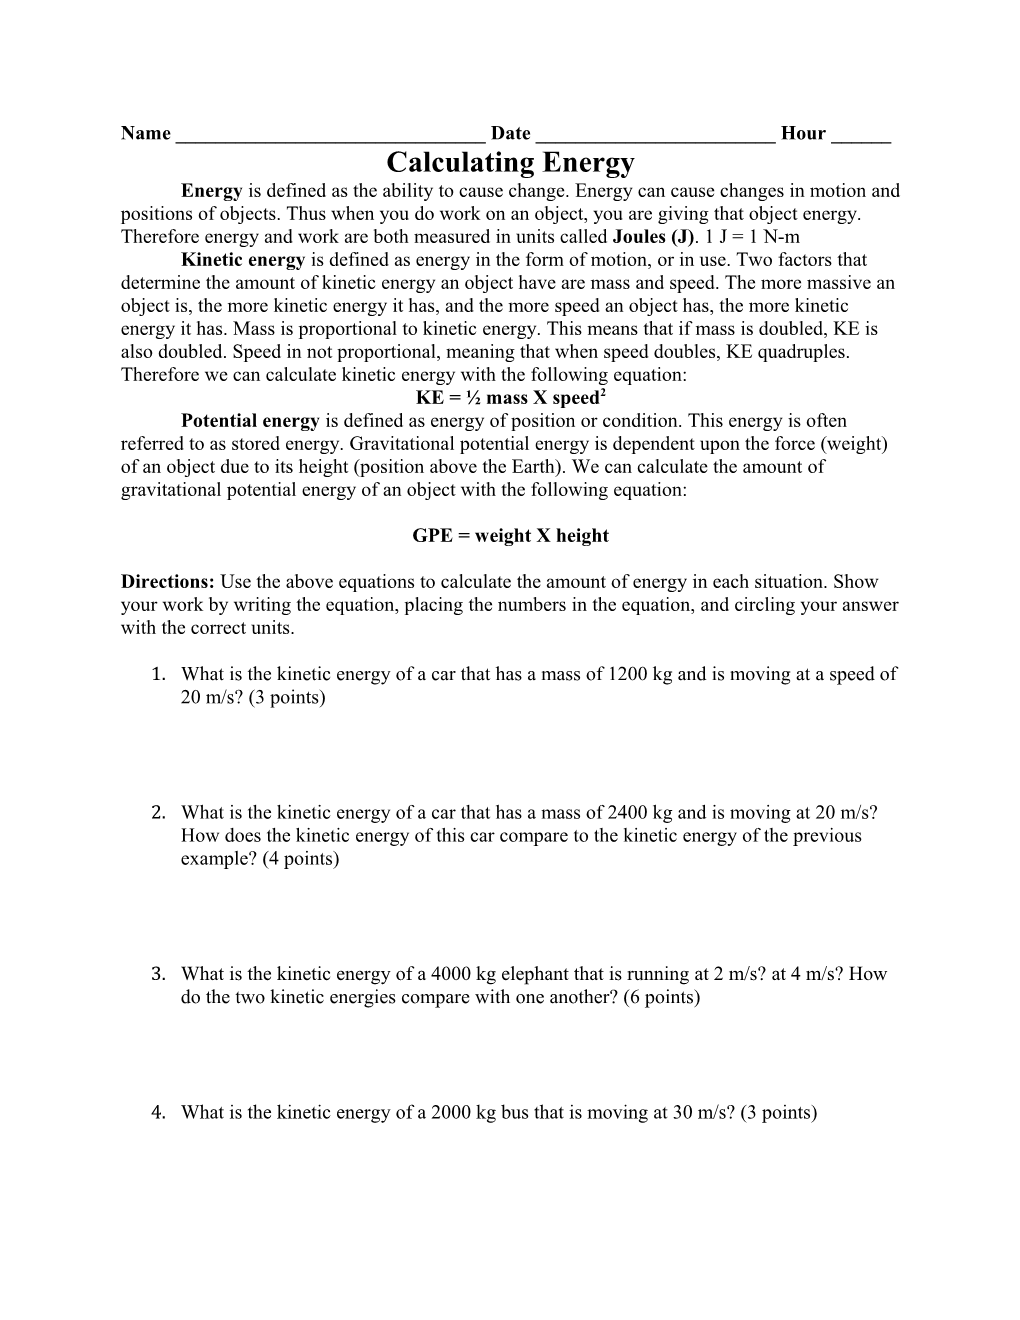 Calculating Energy